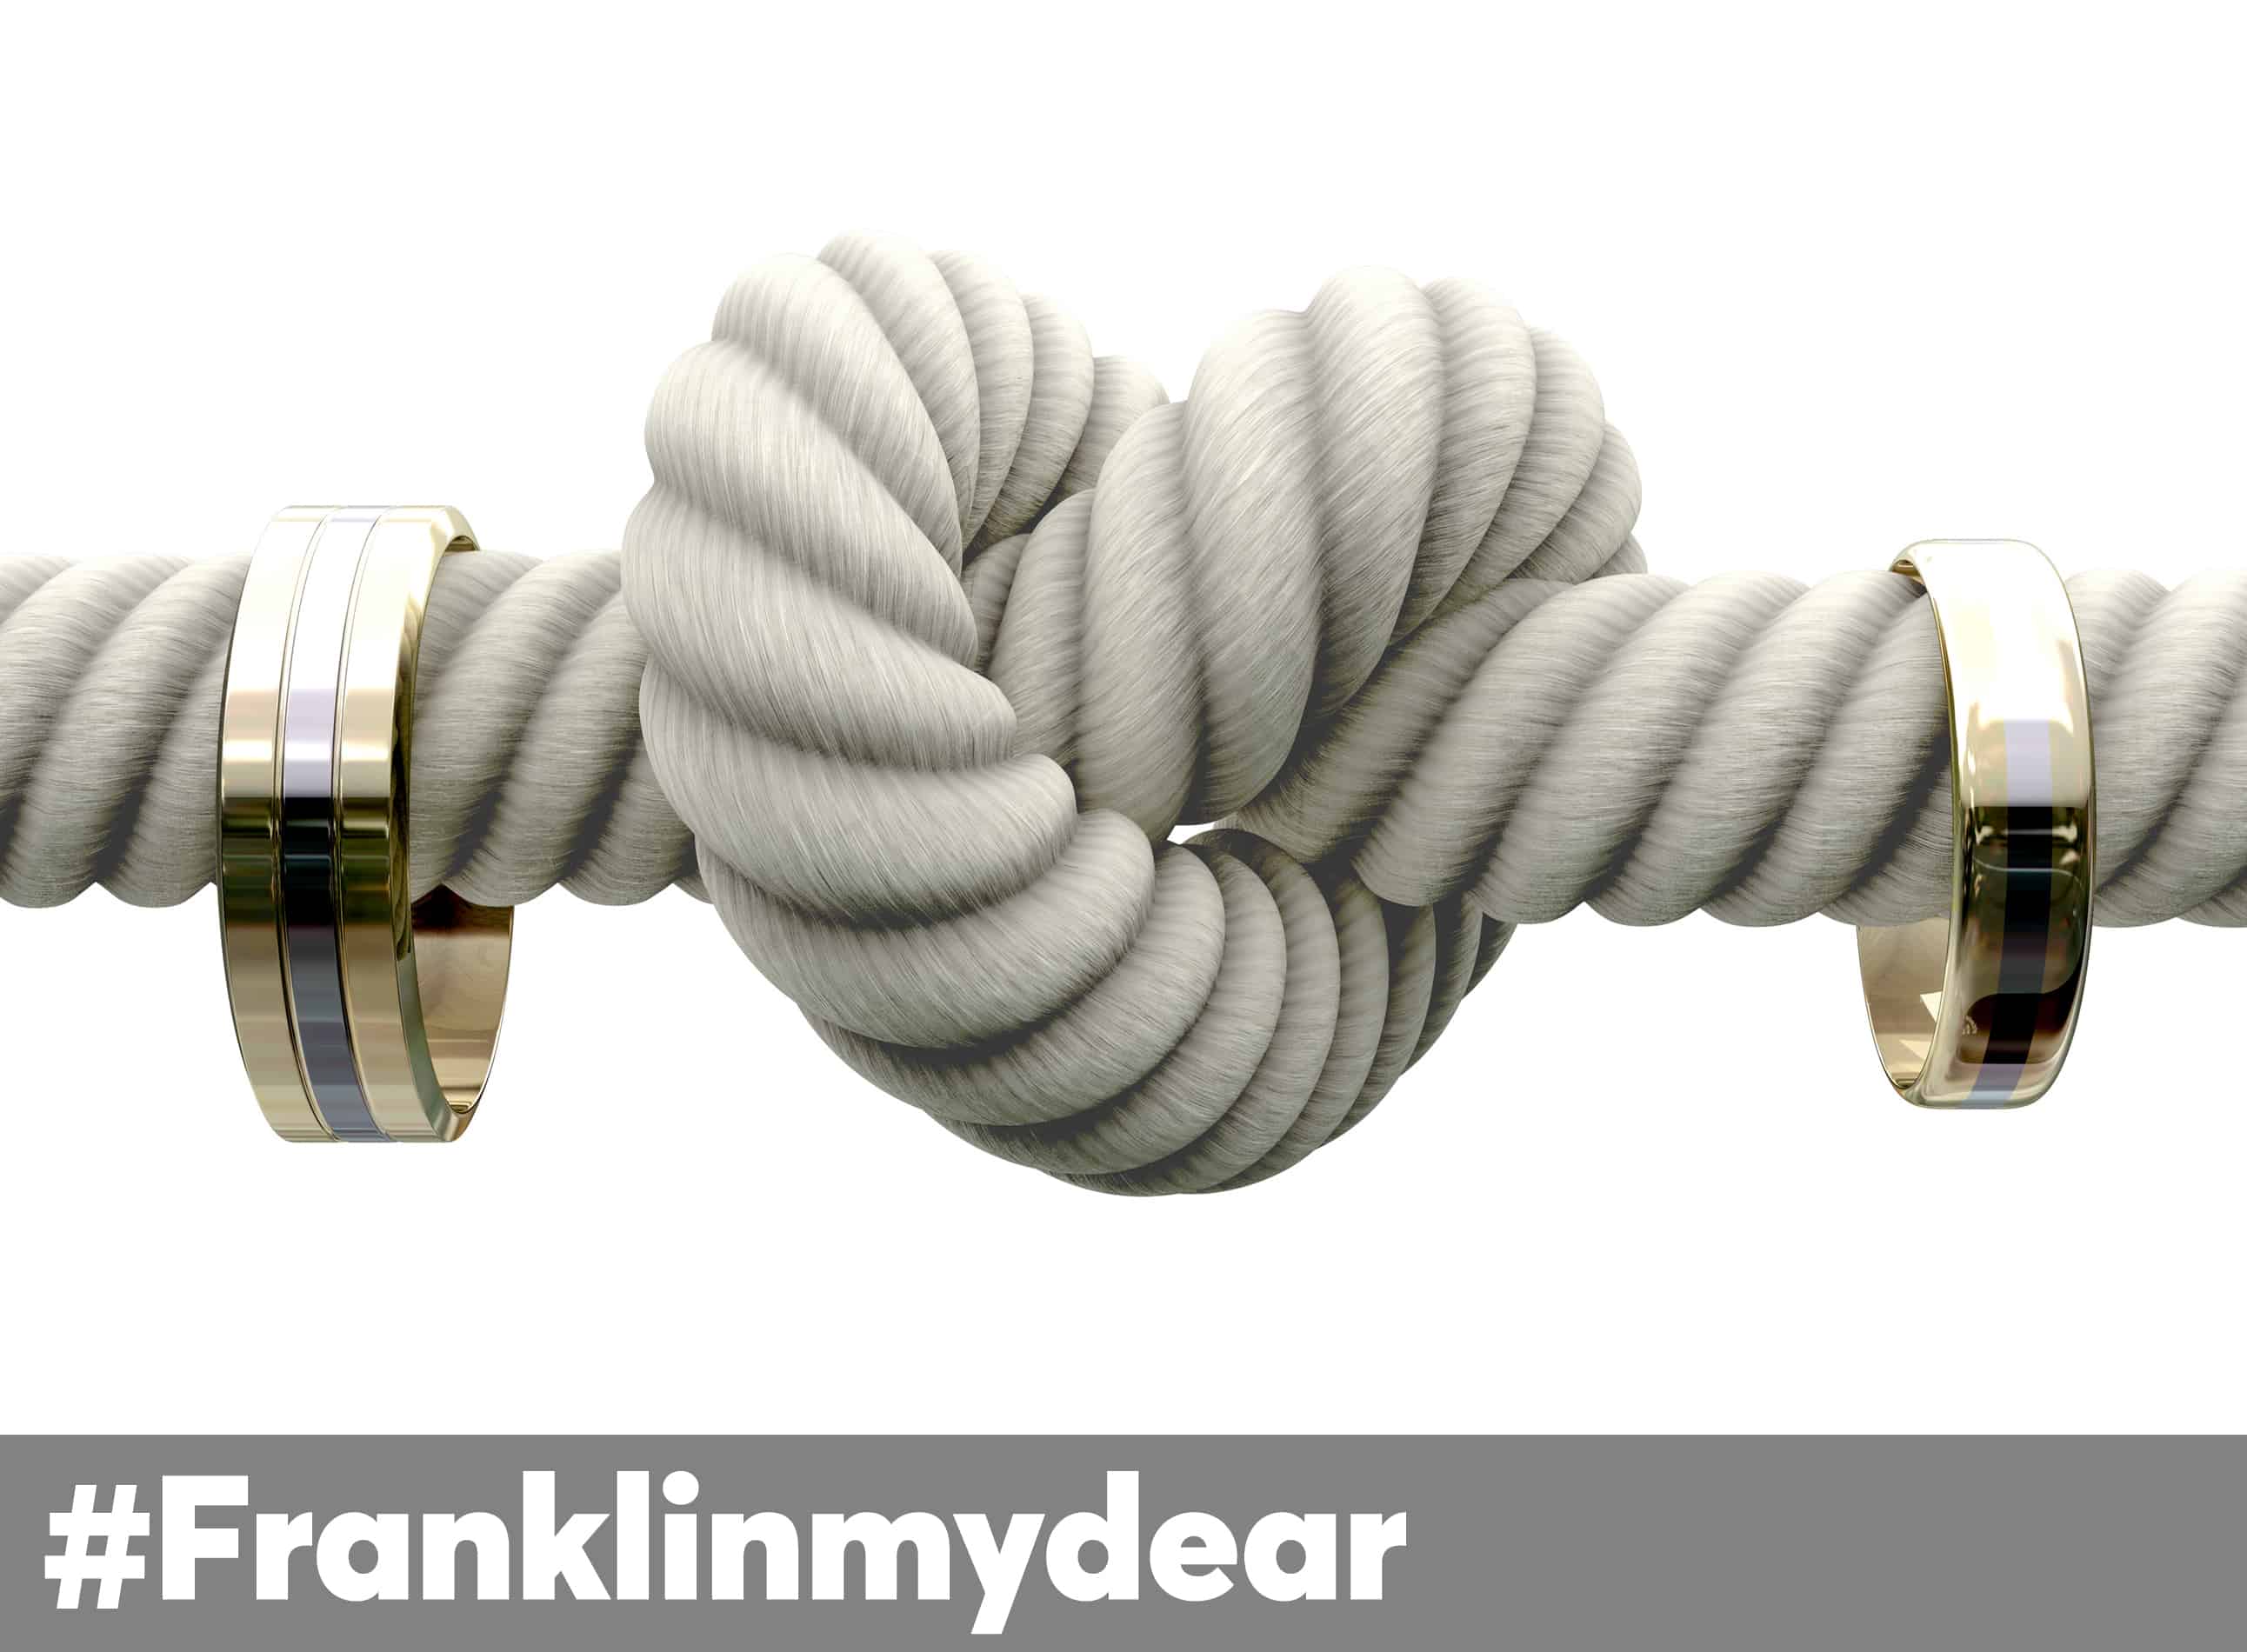 #Franklinmydear — Citizens Bank and Franklin American